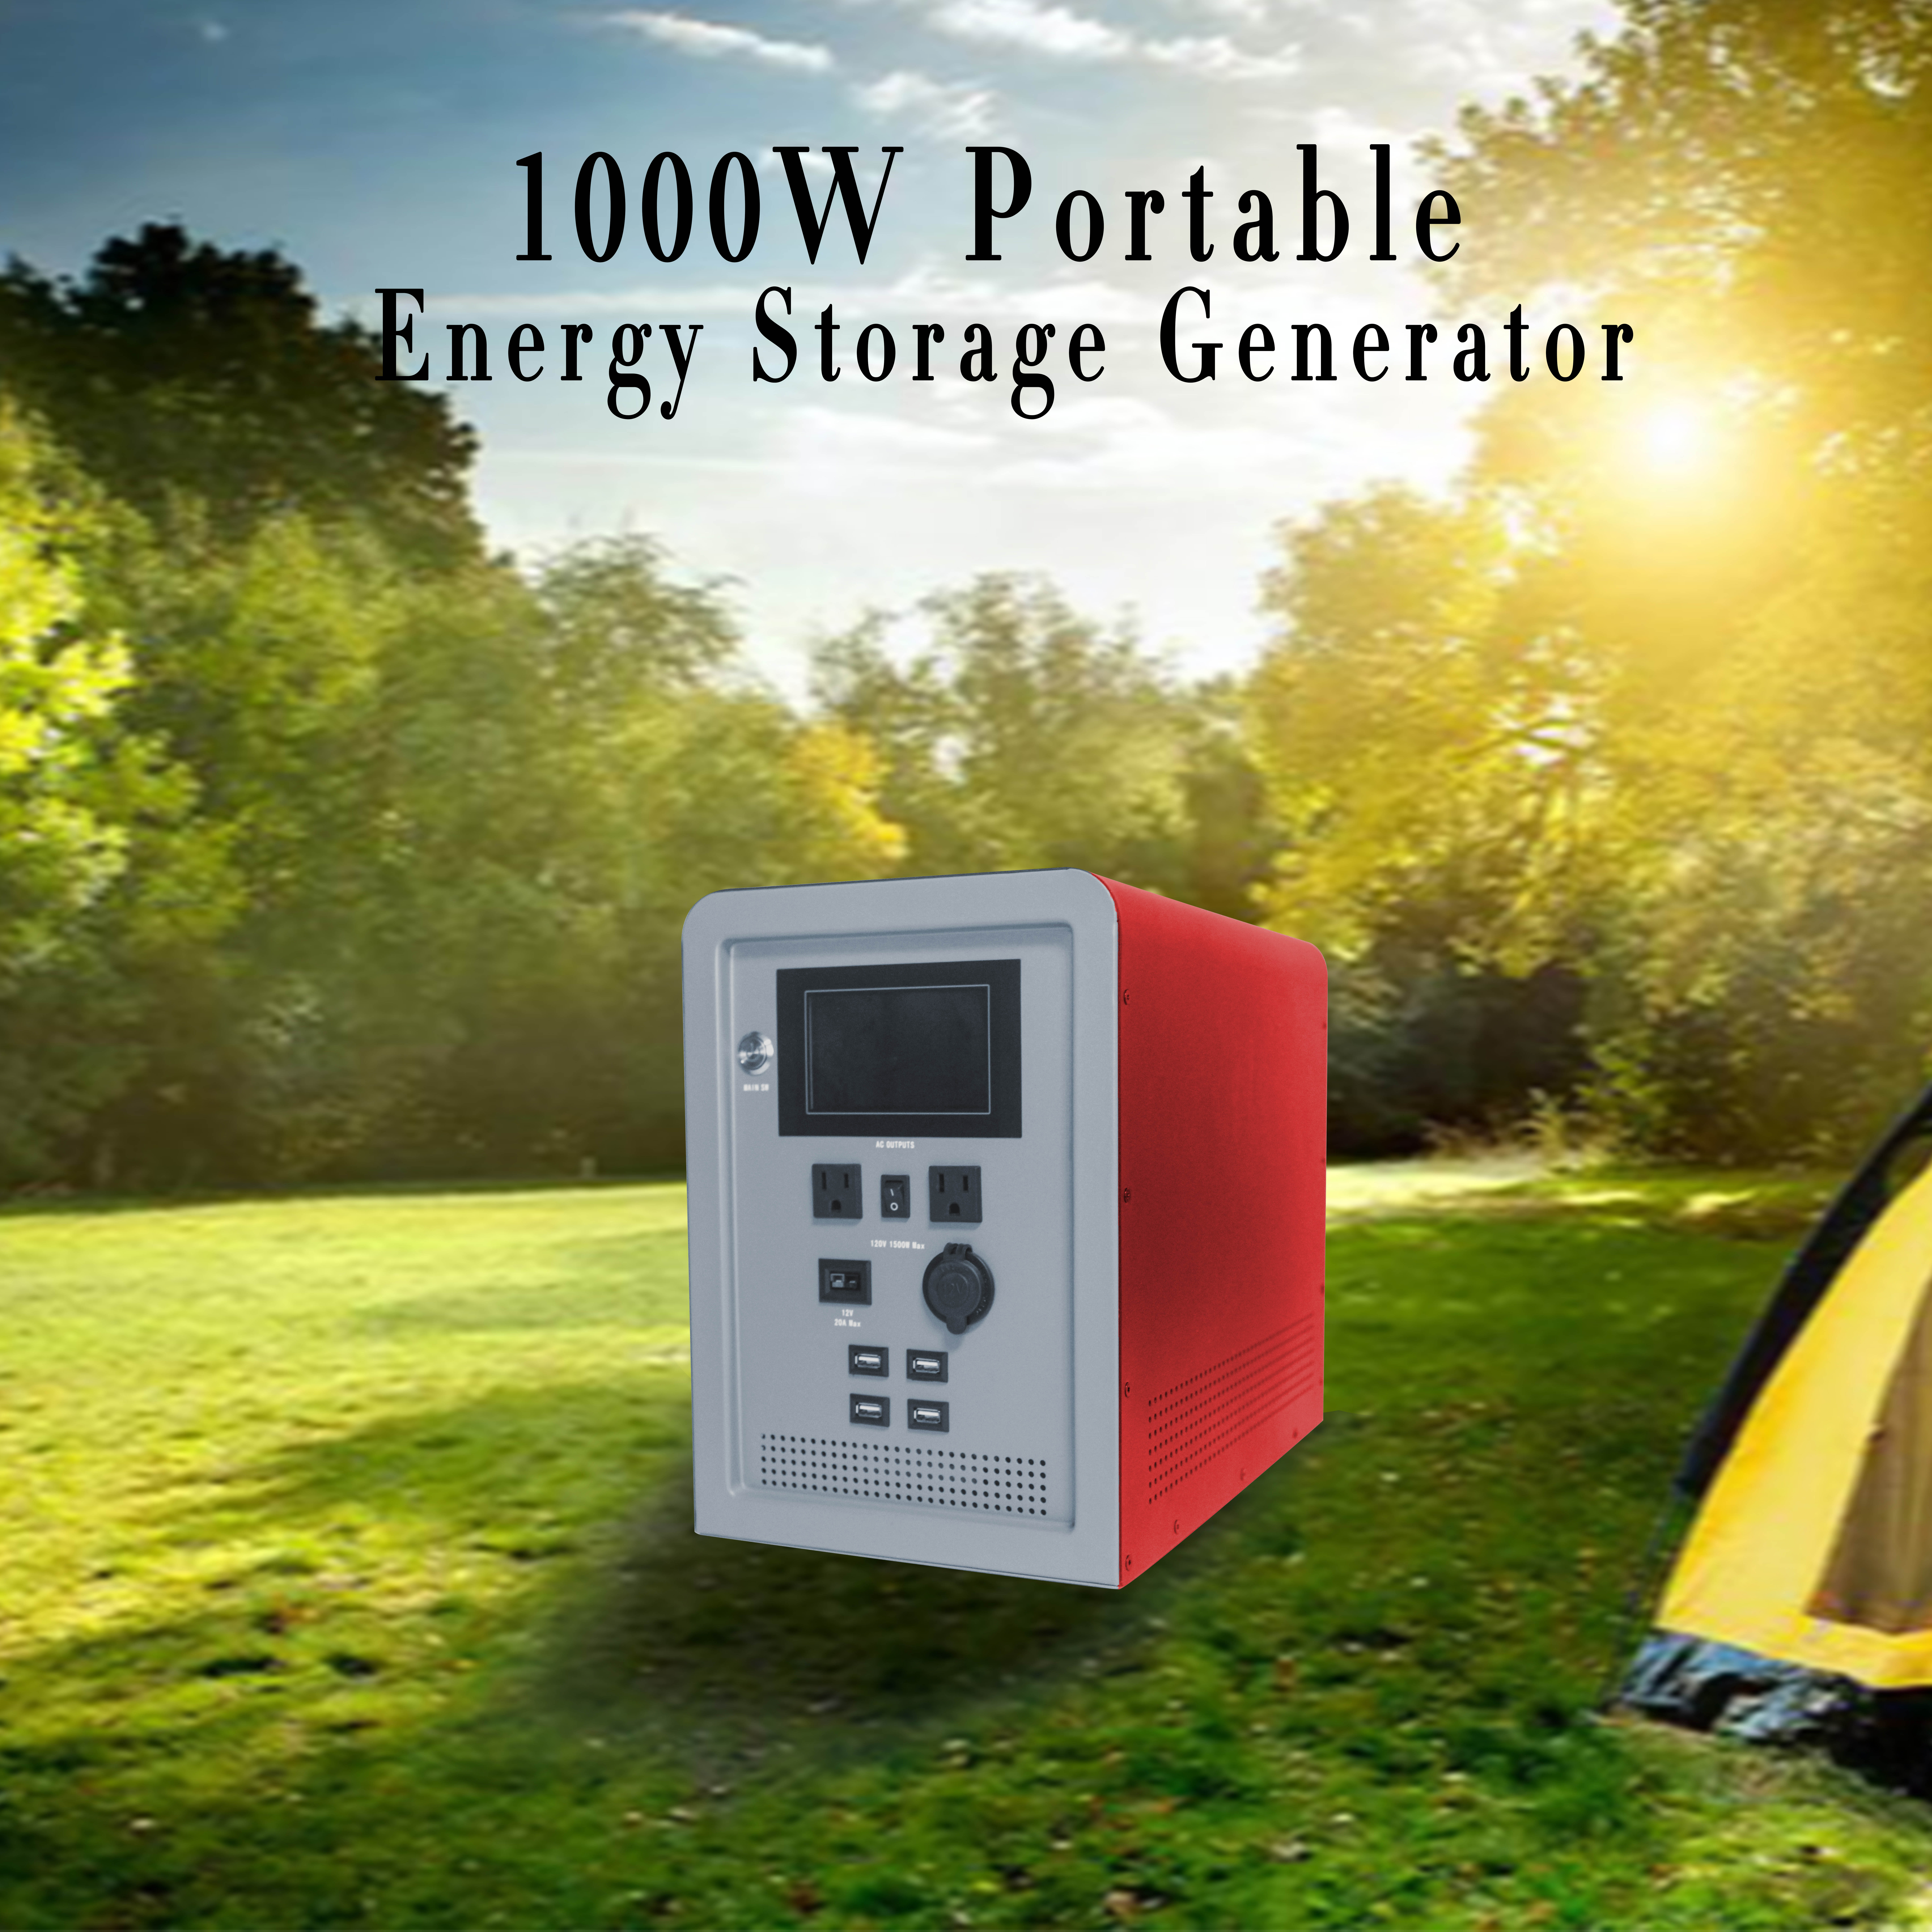 1000W Portable Energy Storage Generator